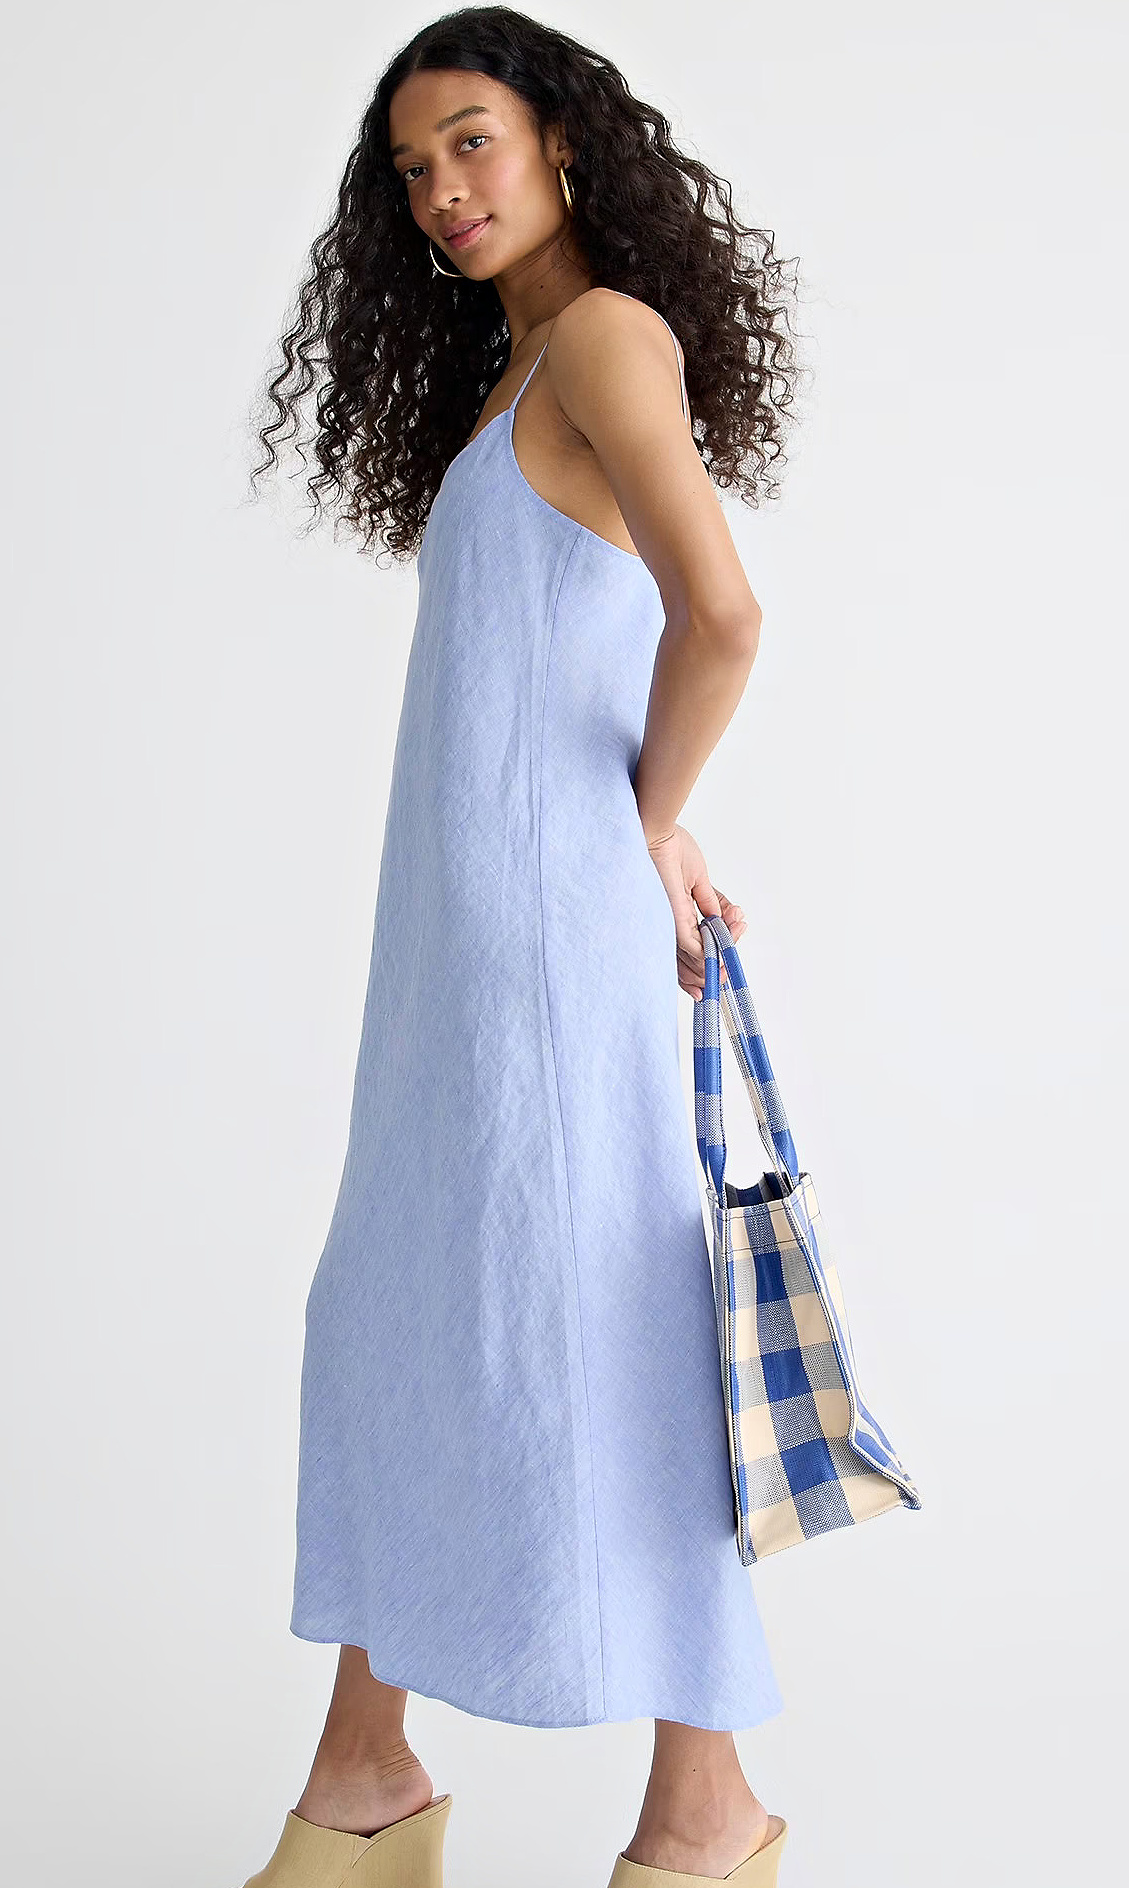 Soft Linen Slip Dress for Women Midi Camisole Dress With